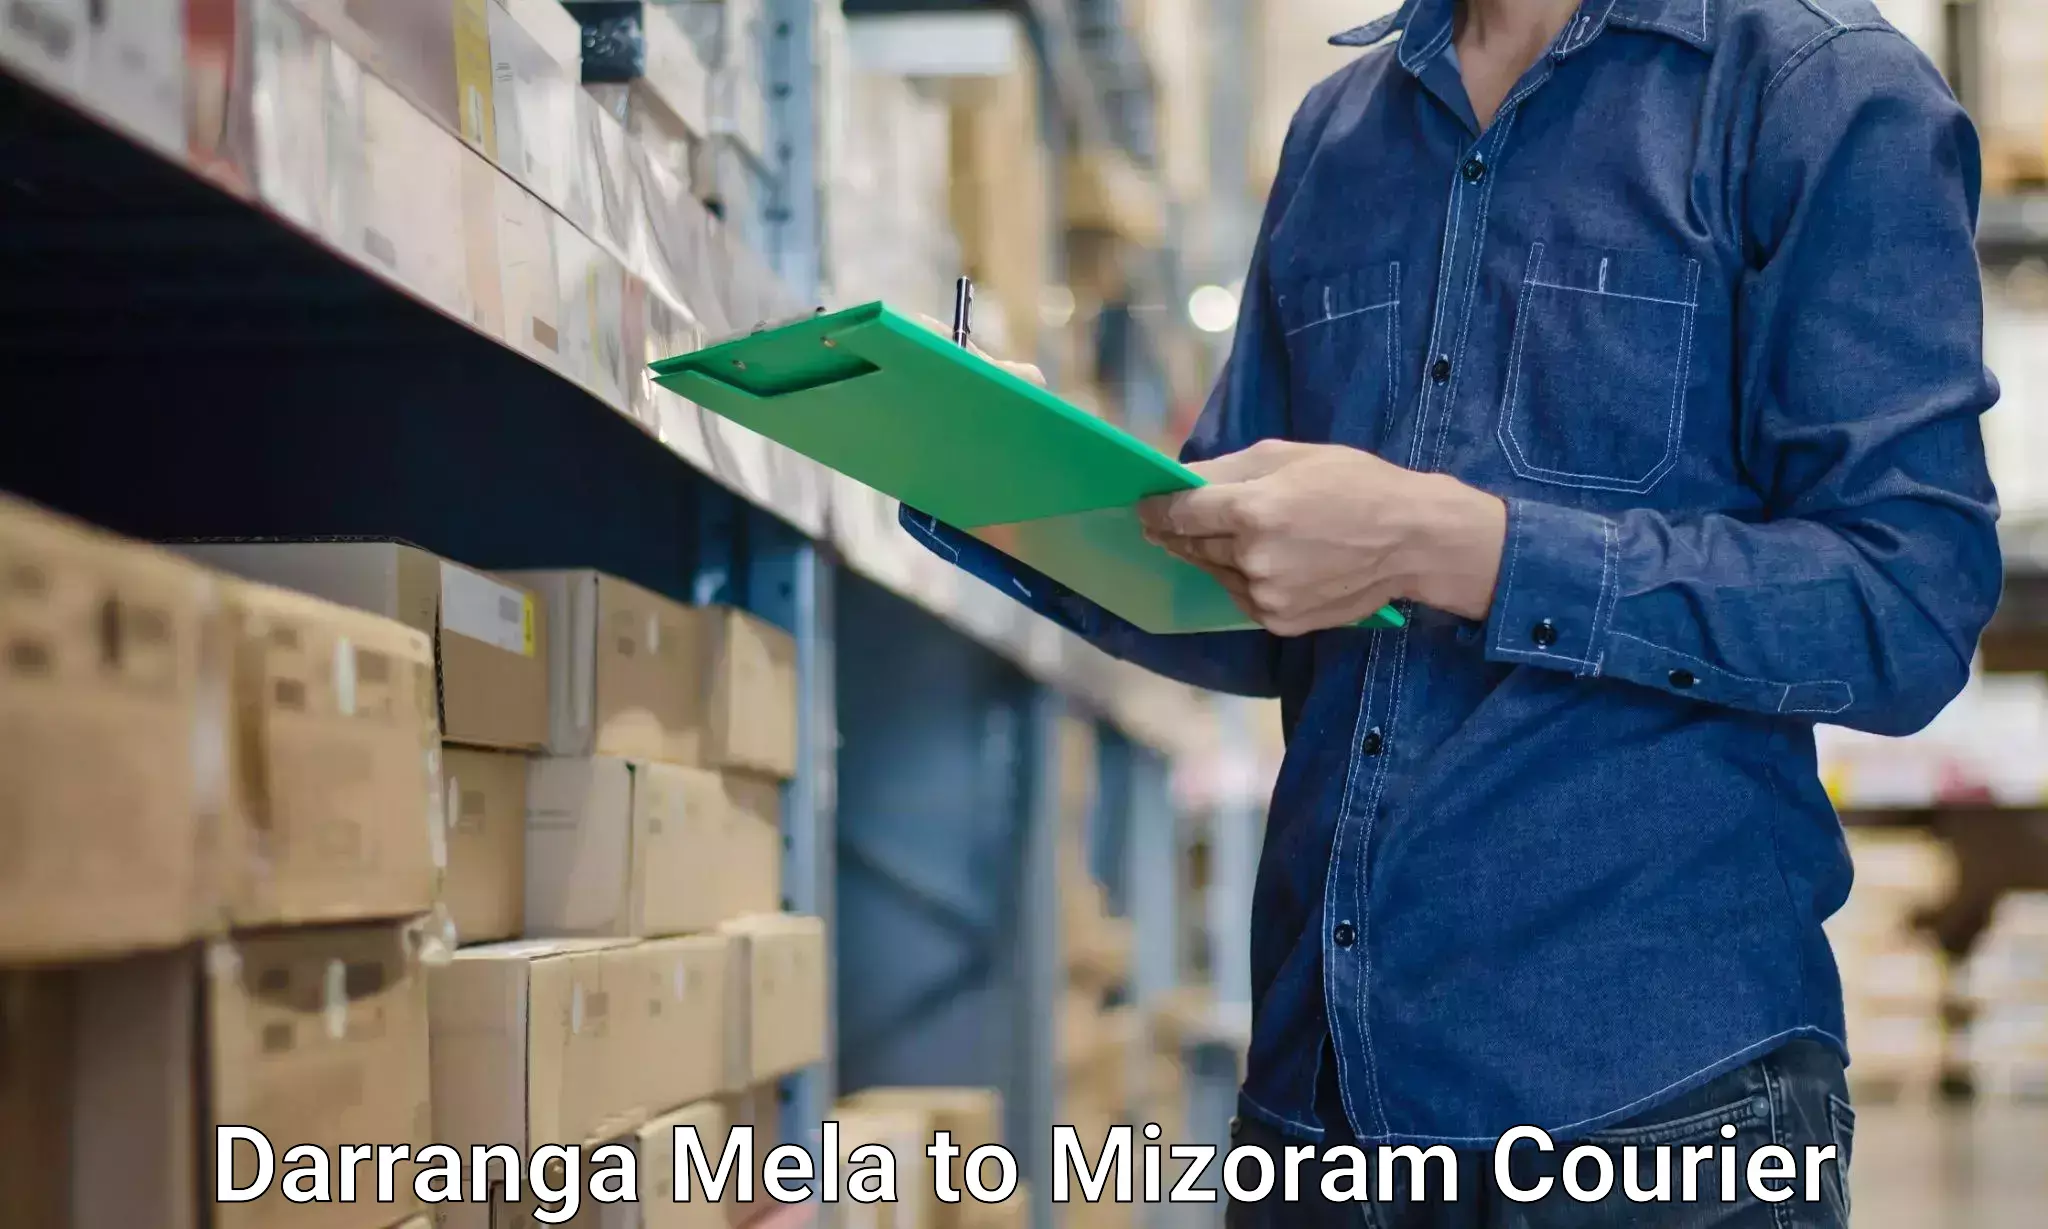 Moving and handling services in Darranga Mela to Mizoram